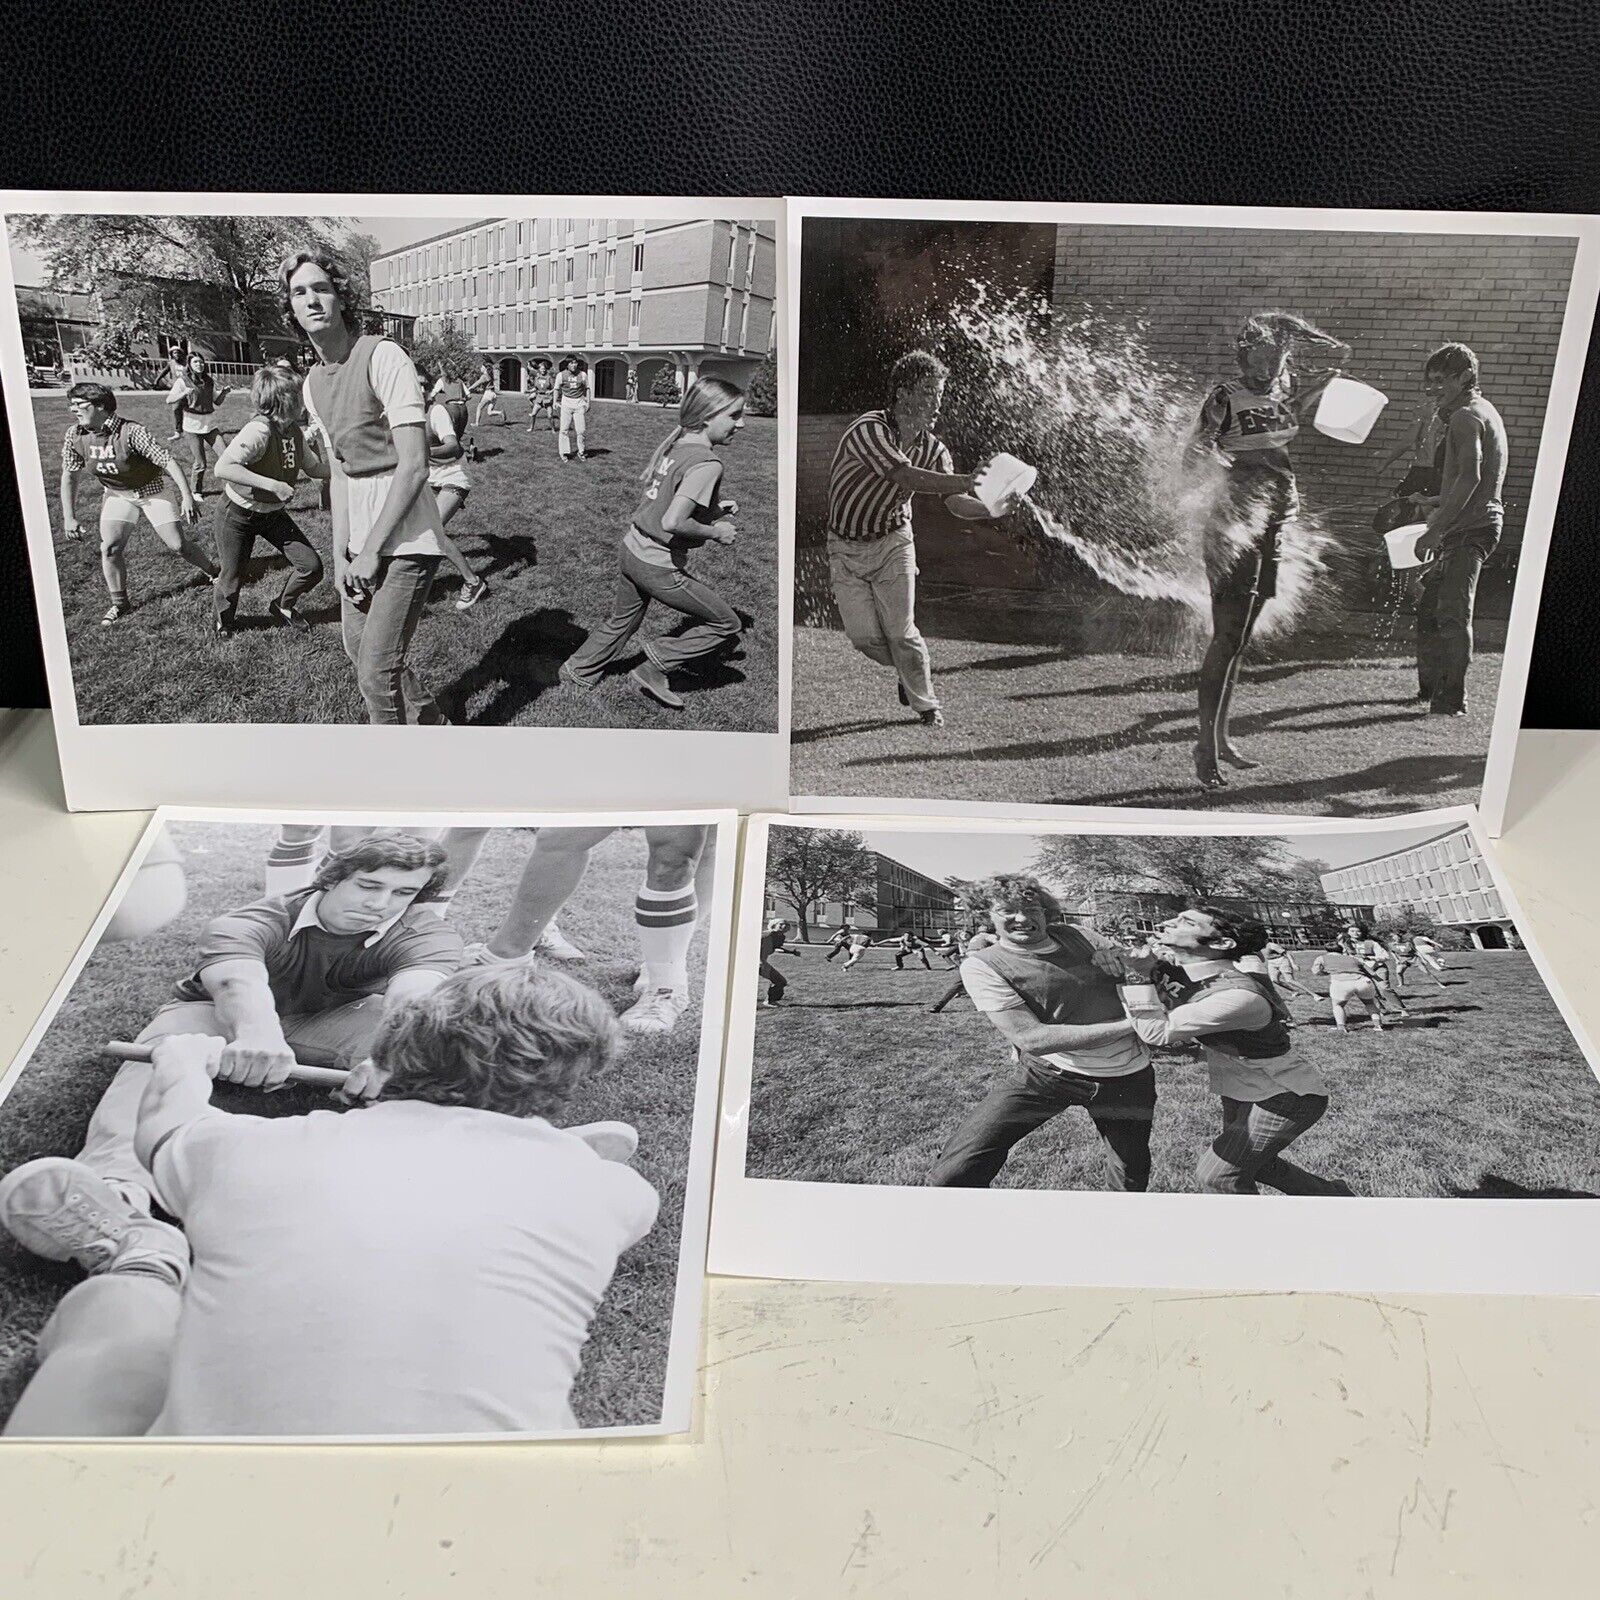 Vintage College Kids Having Fun Photos, 8x10 Photographs Black And White. 